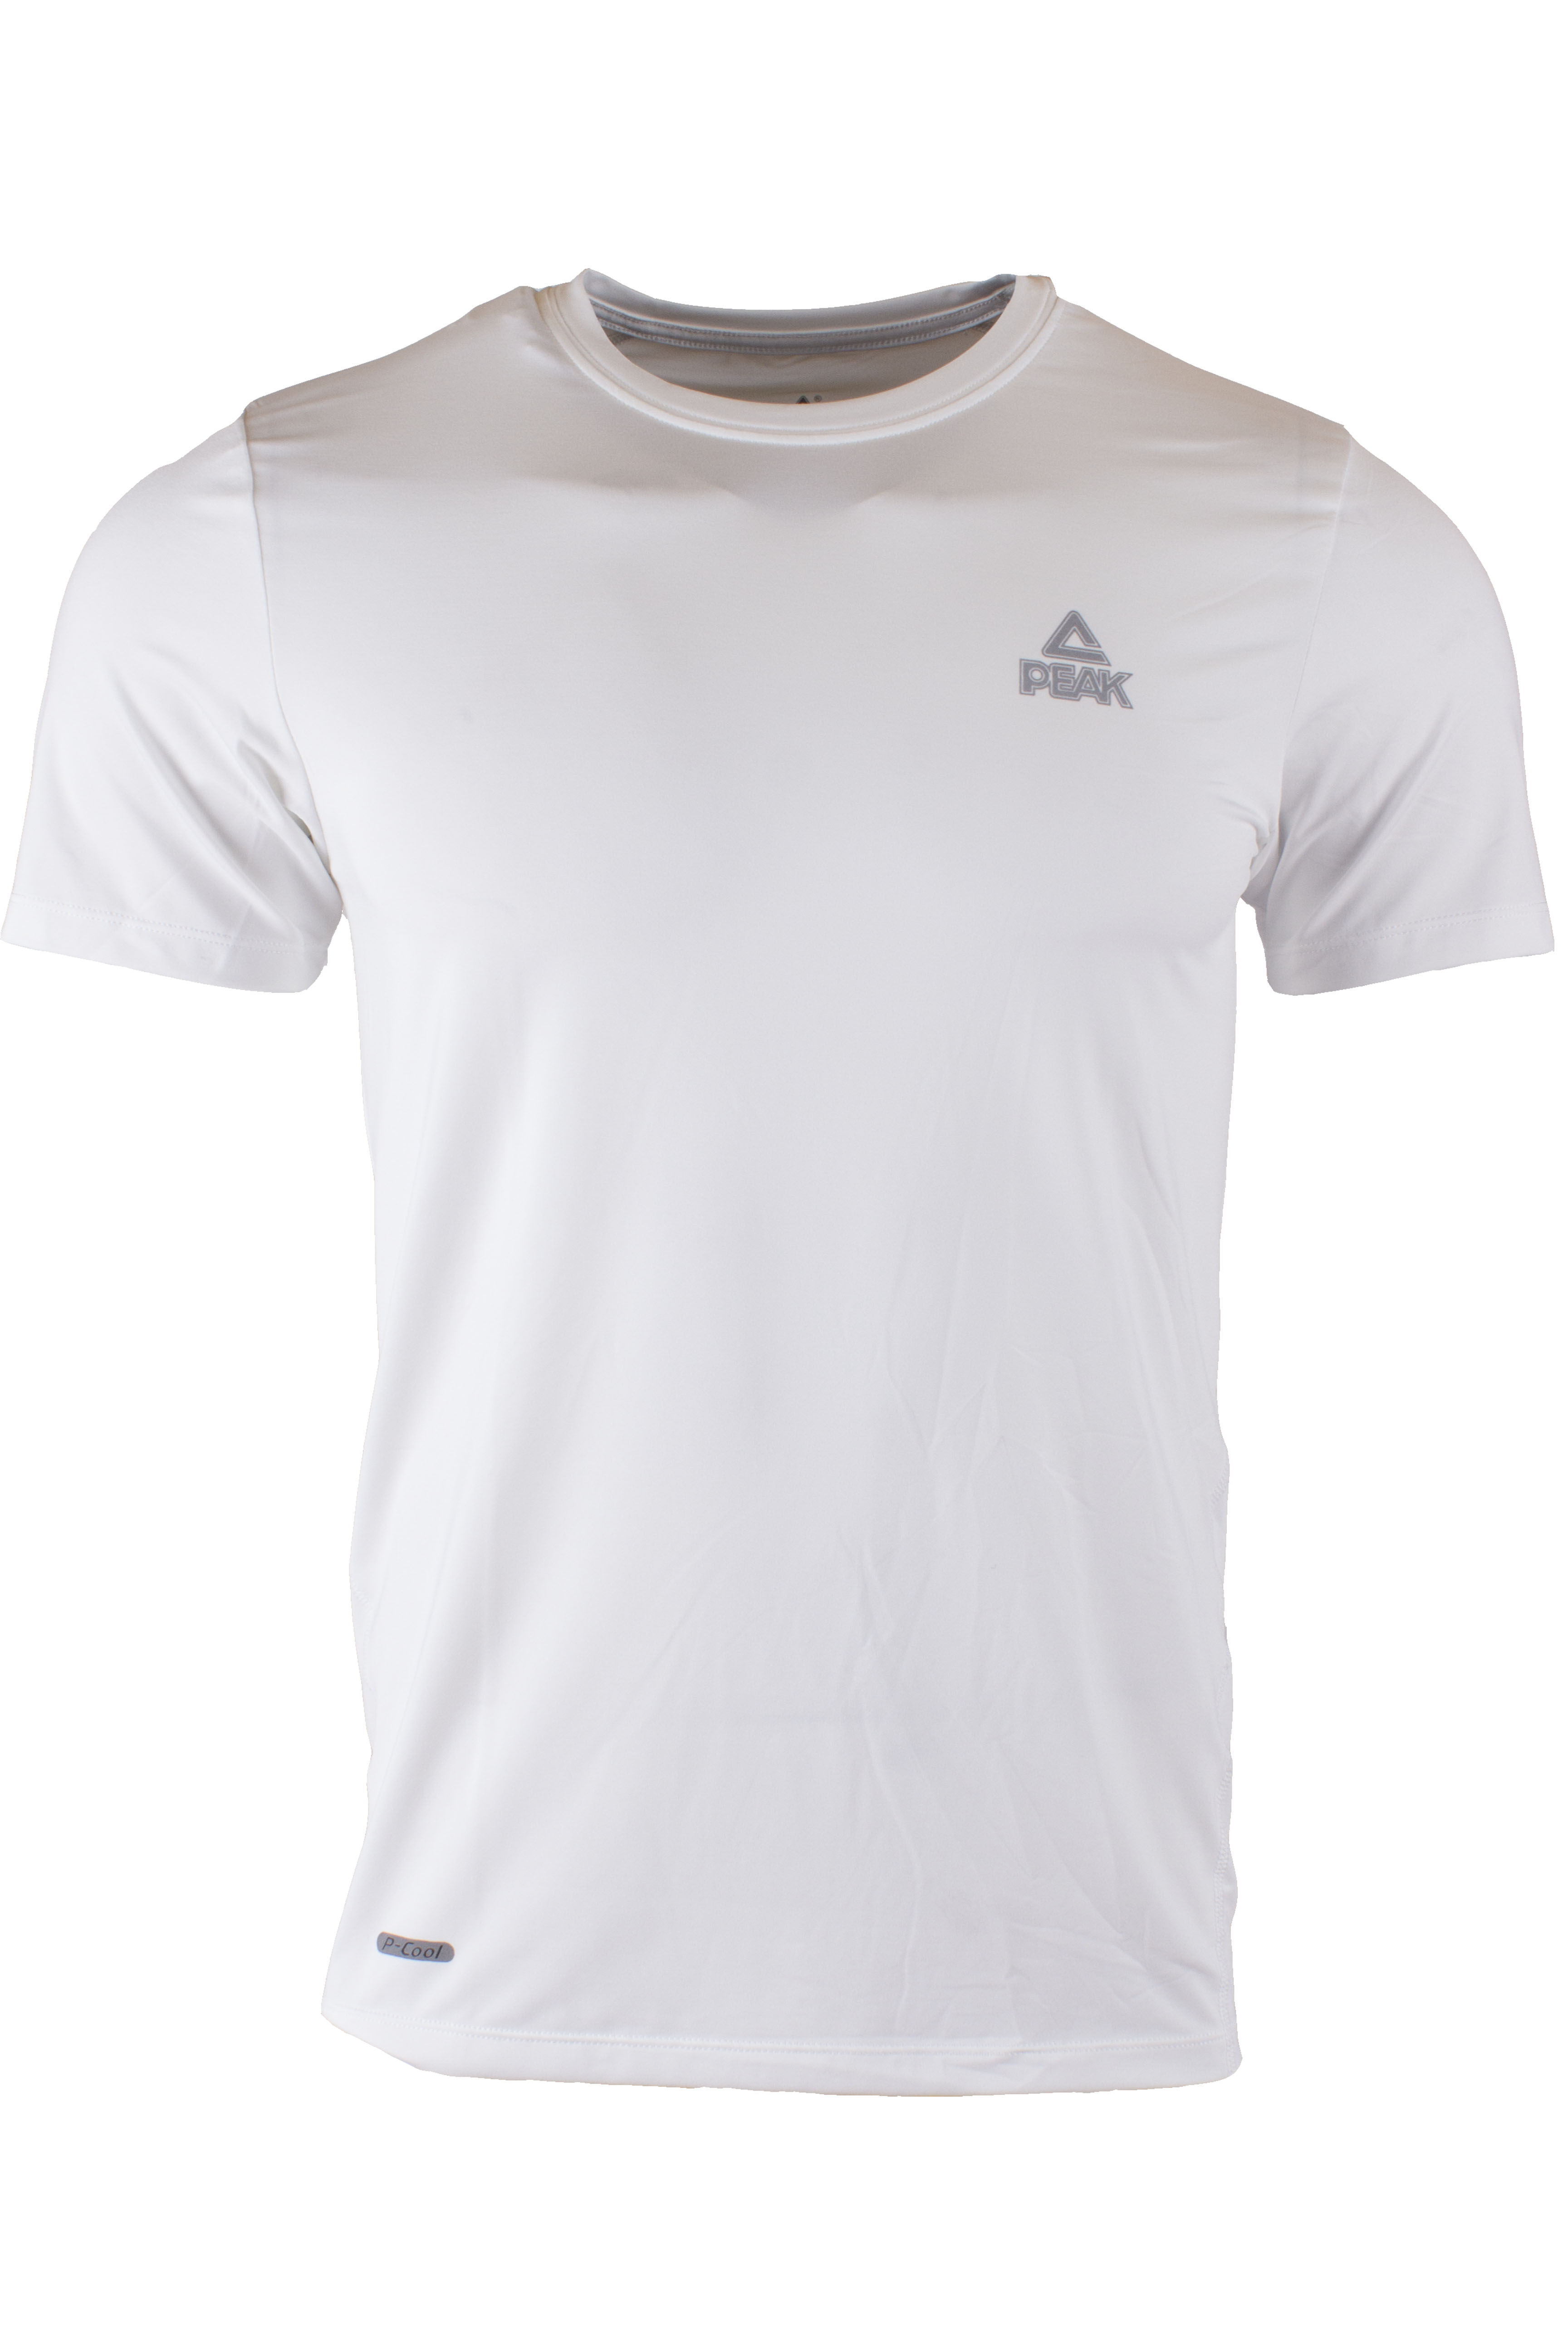 Спортивная футболка PEAK (FW63241, White)